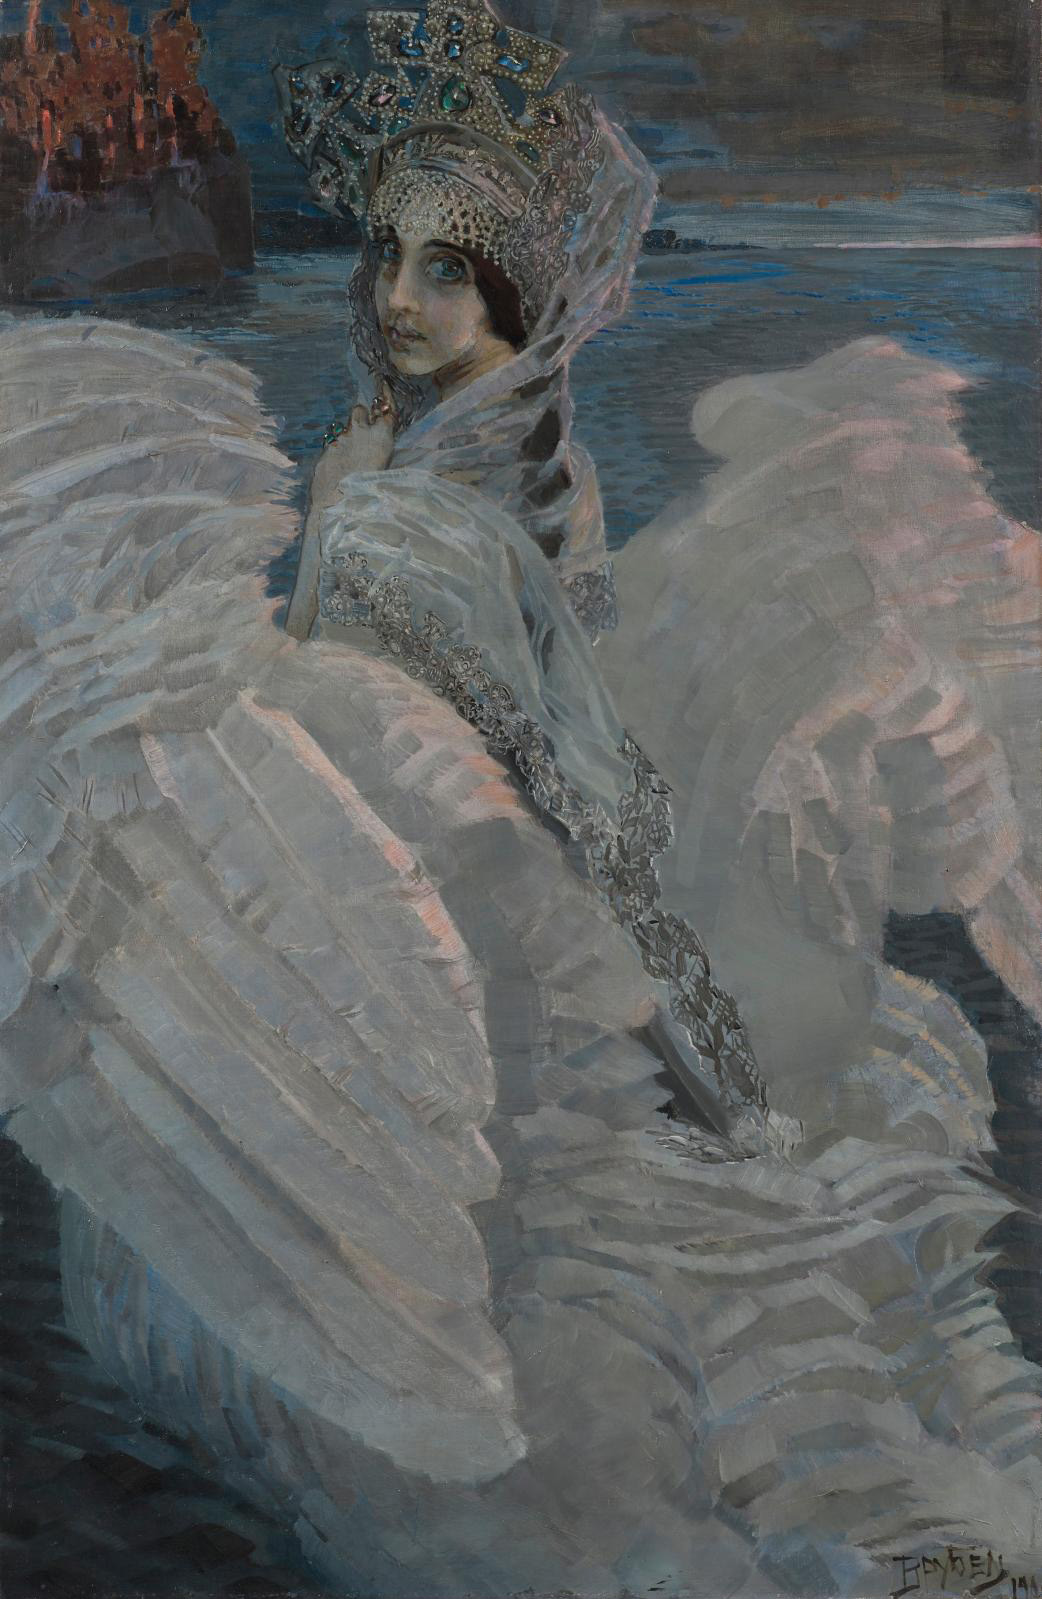 Mikhaïl Vroubel (1856-1910), La Princesse cygne, 1900, oil on canvas, 142.5 x 93.5 cm /56.10 x 36.81 in (detail), Moscow, Tretyakov Galler